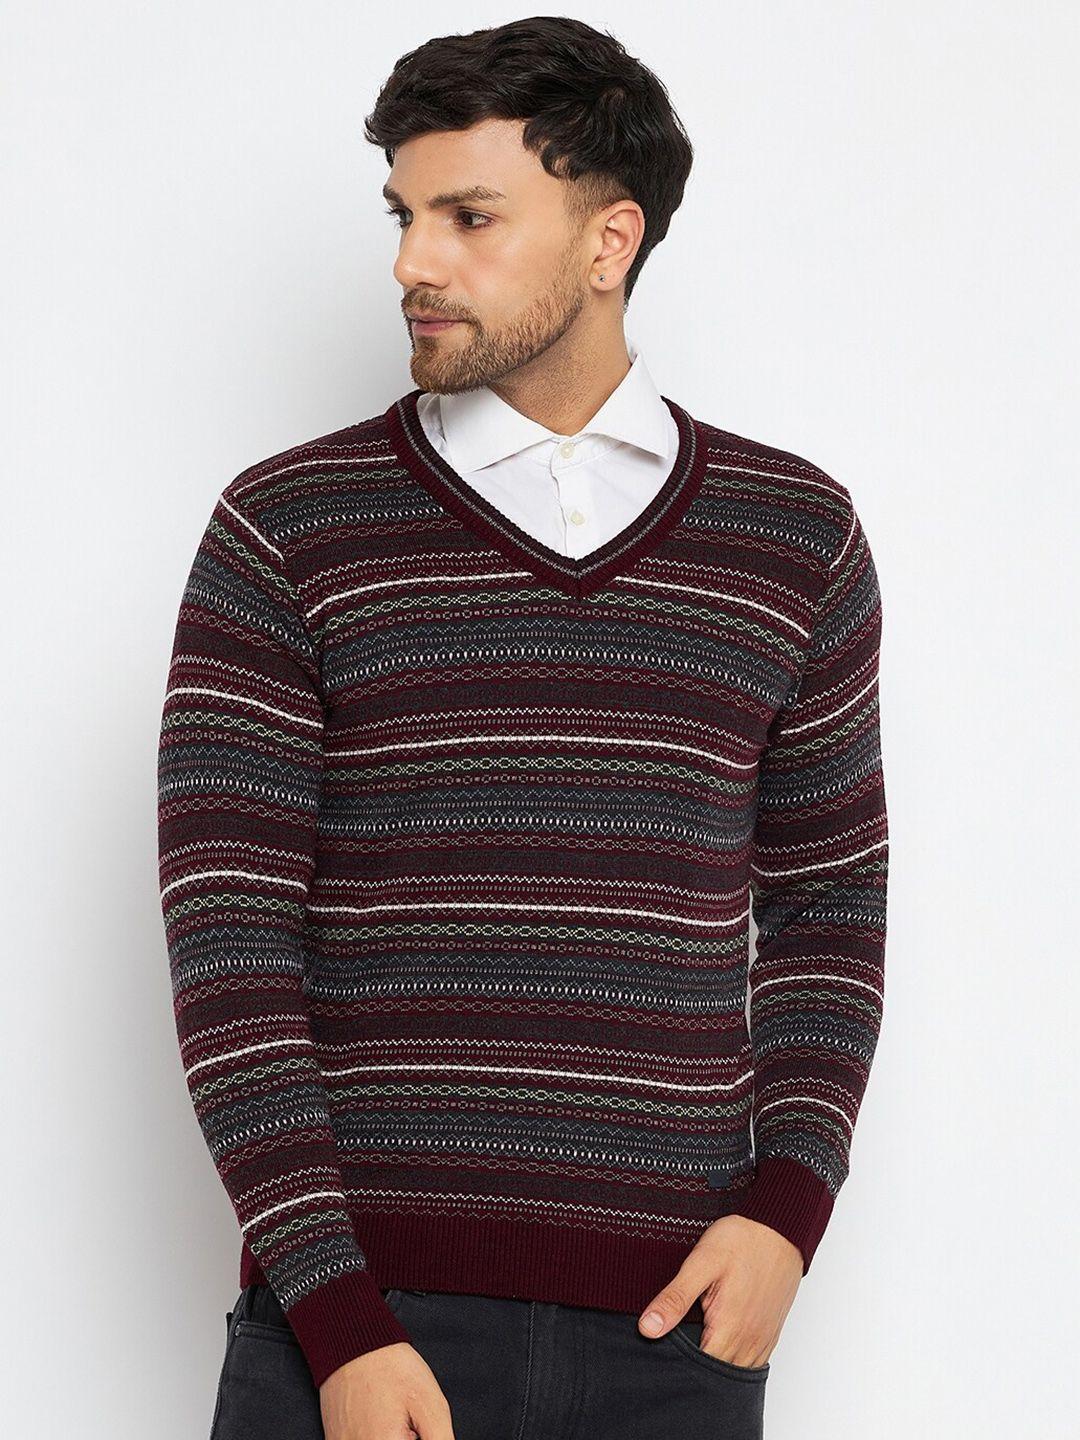 duke-argyle-printed-v-neck-long-sleeves-acrylic-pullover-sweaters